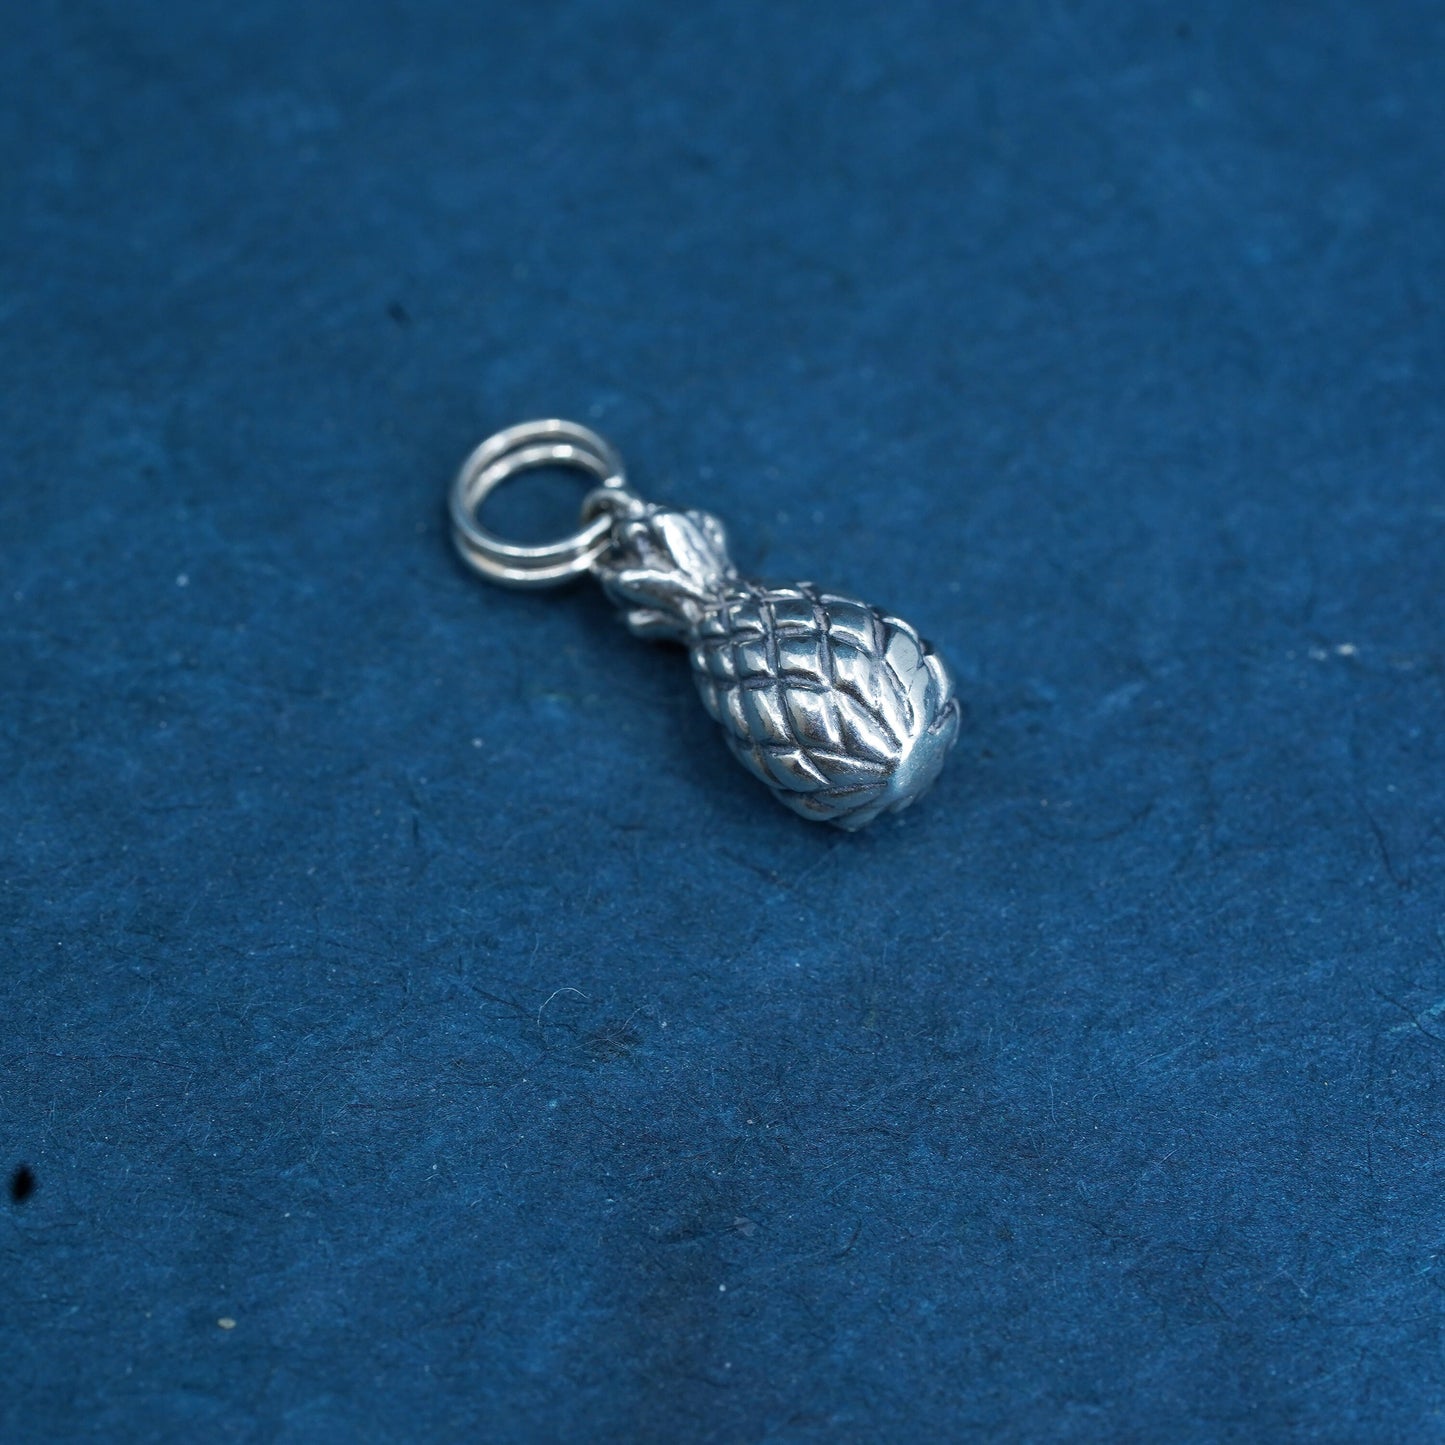 Vintage Sterling silver handmade pendant, 925 pineapple charm